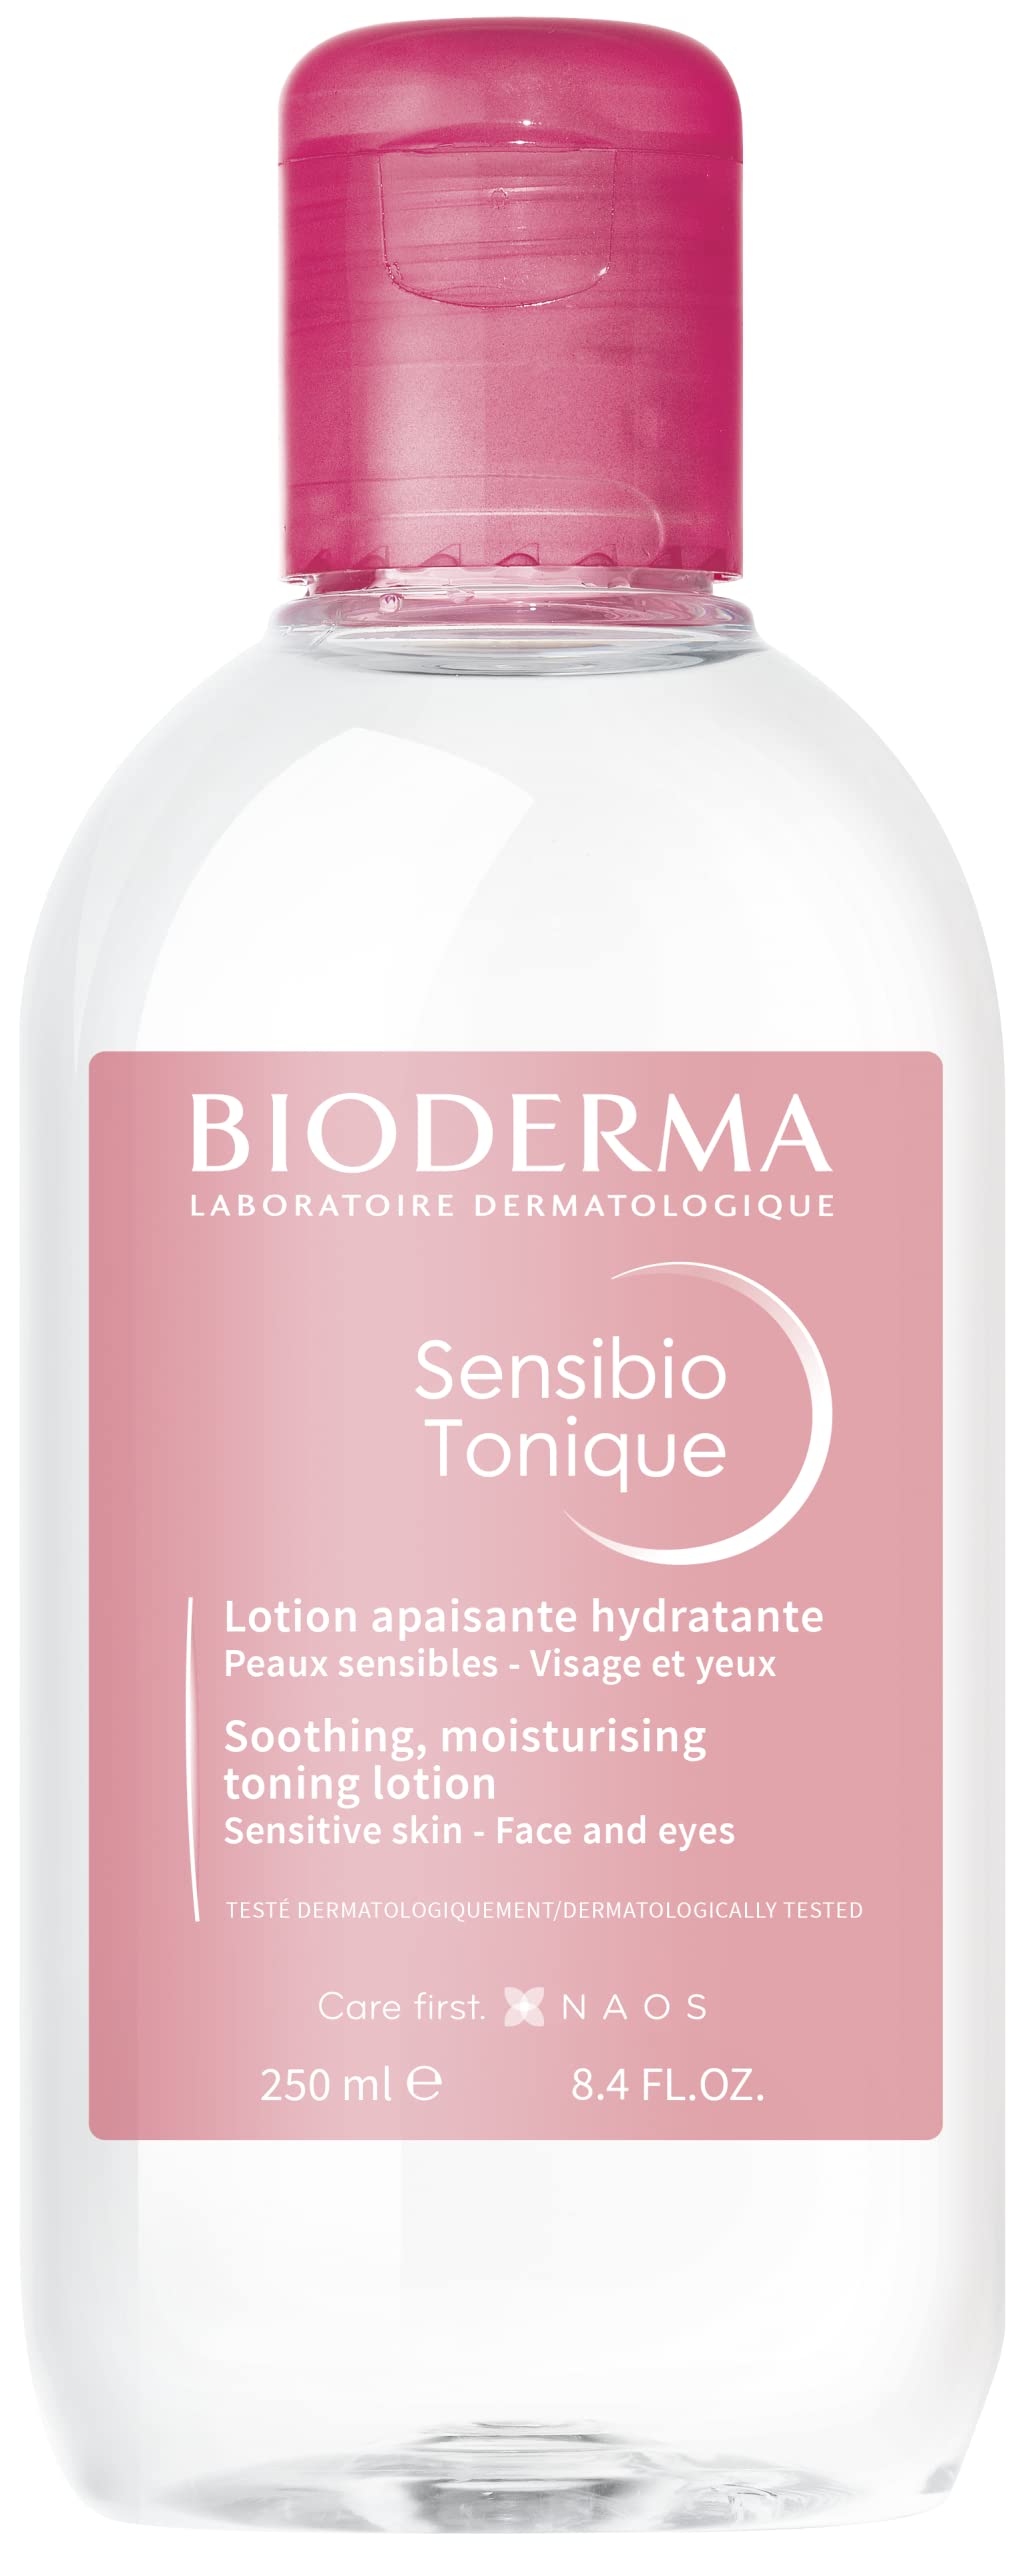 Bioderma - Sensibio Face Toner - Skin Soothing and Moisturizing - Gentle Facial Toner for Sensitive Skin